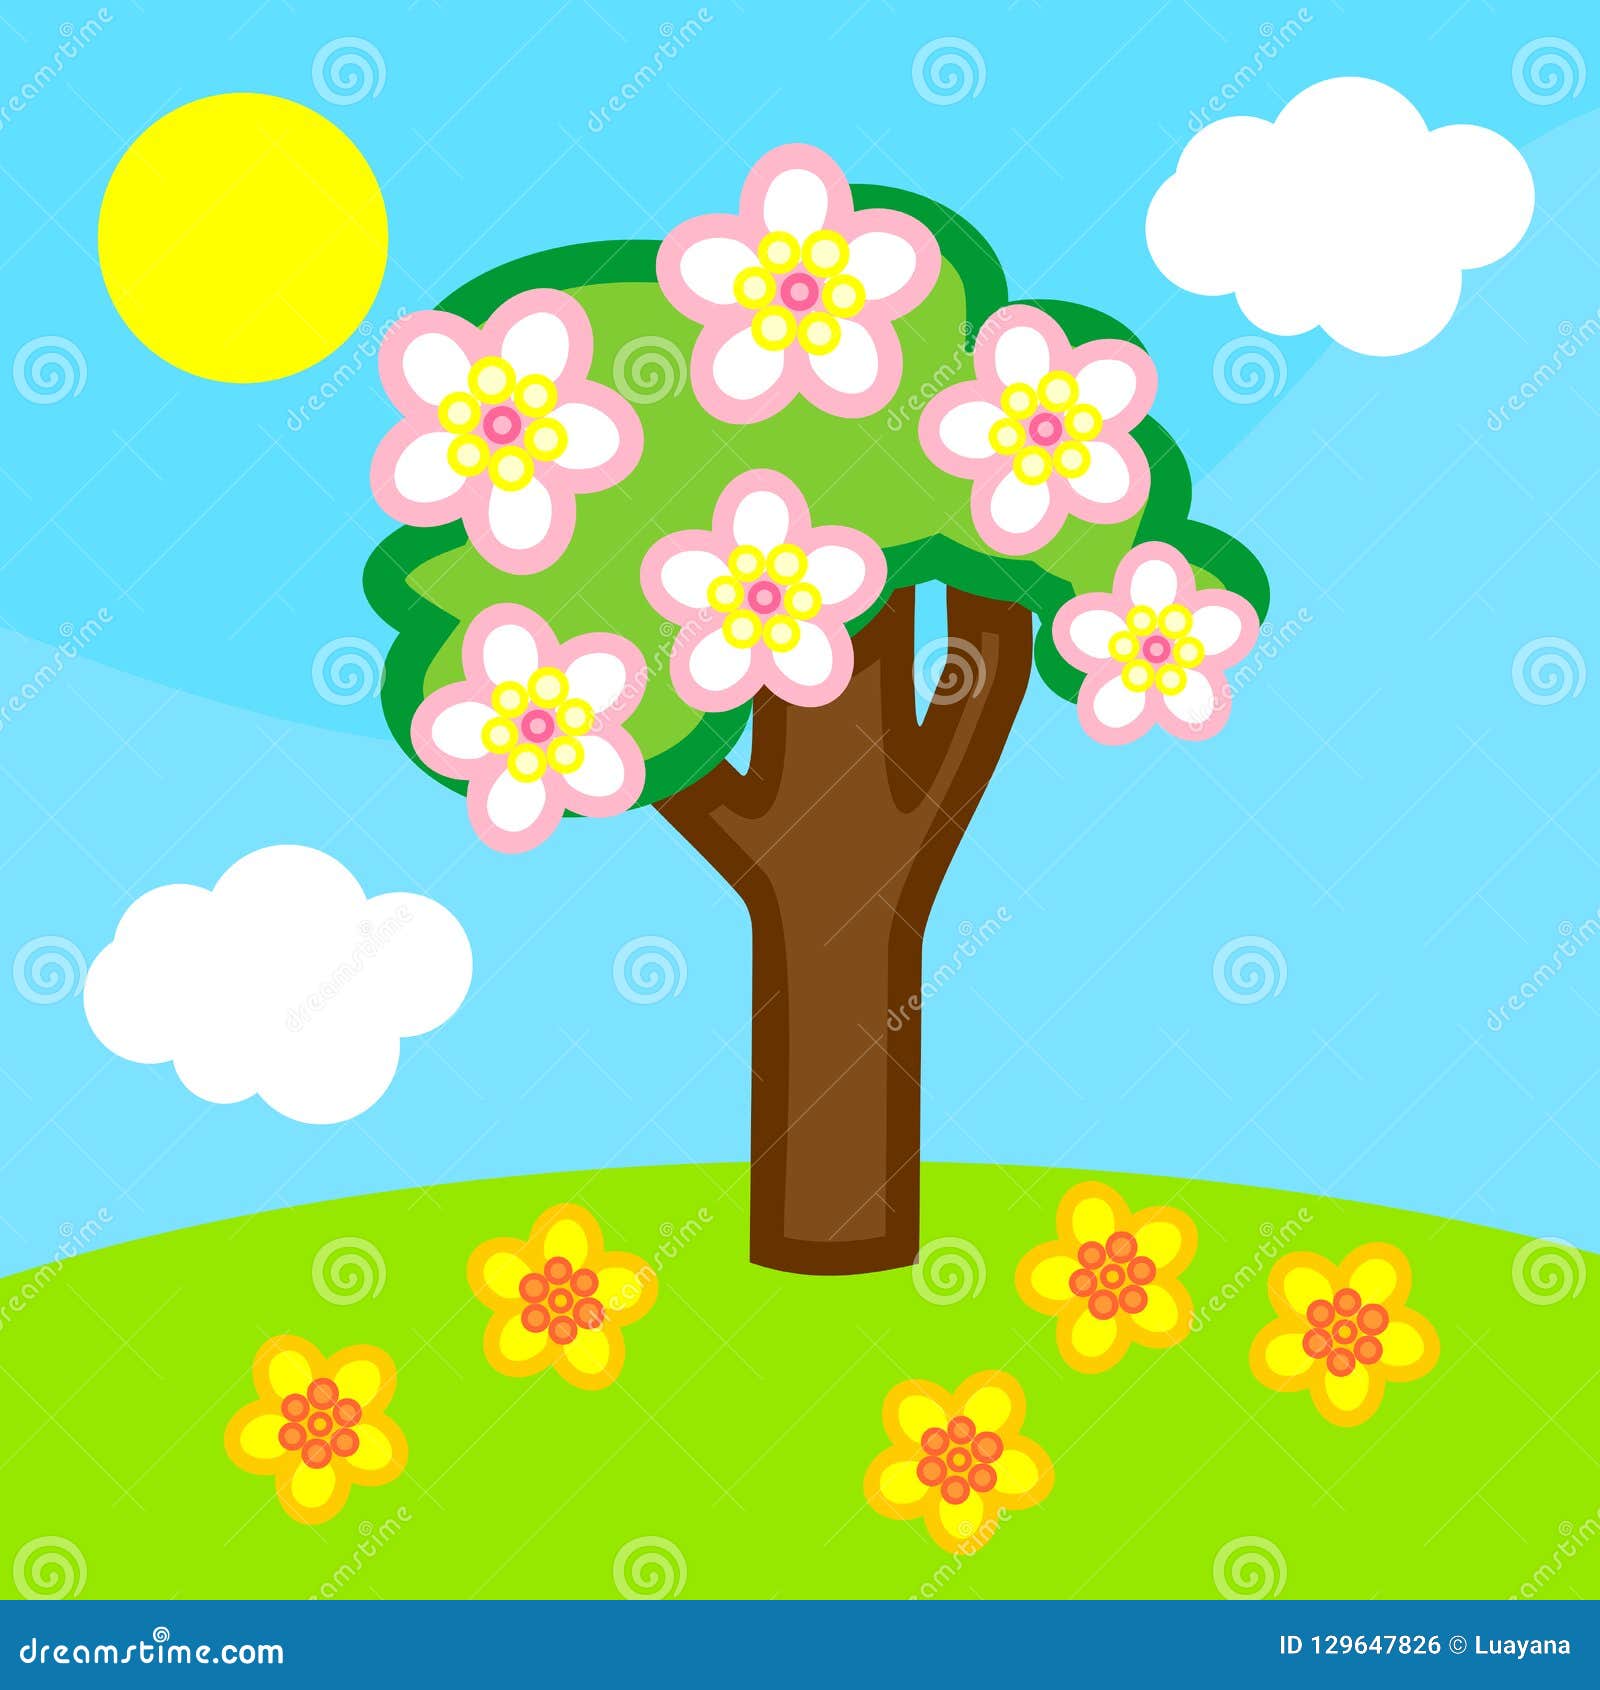 Cartoon Spring Landscape with Flowering Tree Stock Vector - Illustration of  blooming, garden: 129647826